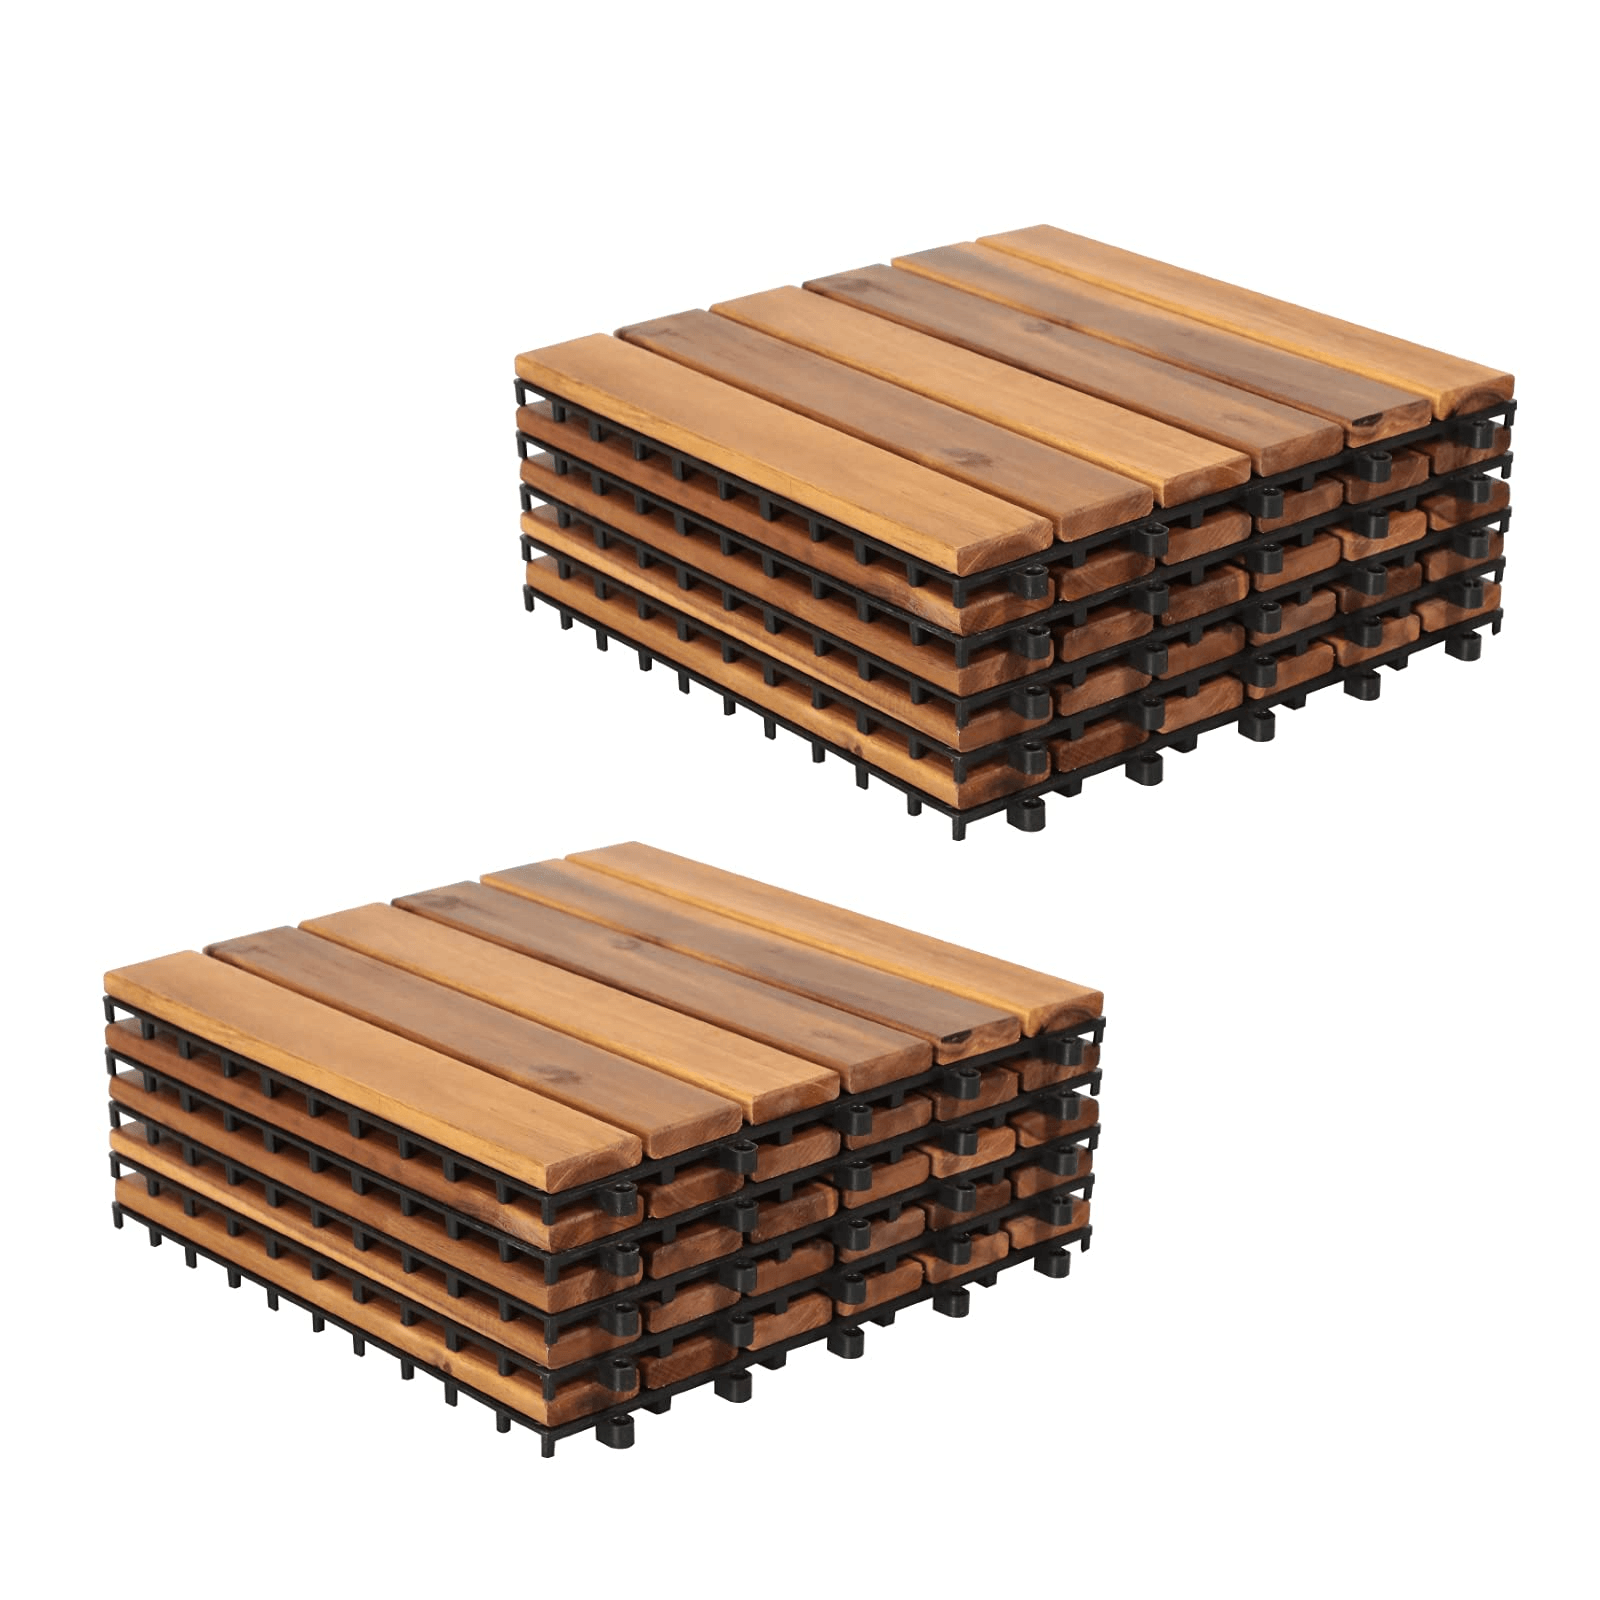 Wood Interlocking Flooring Tiles,12 x 12 Inch sale now 